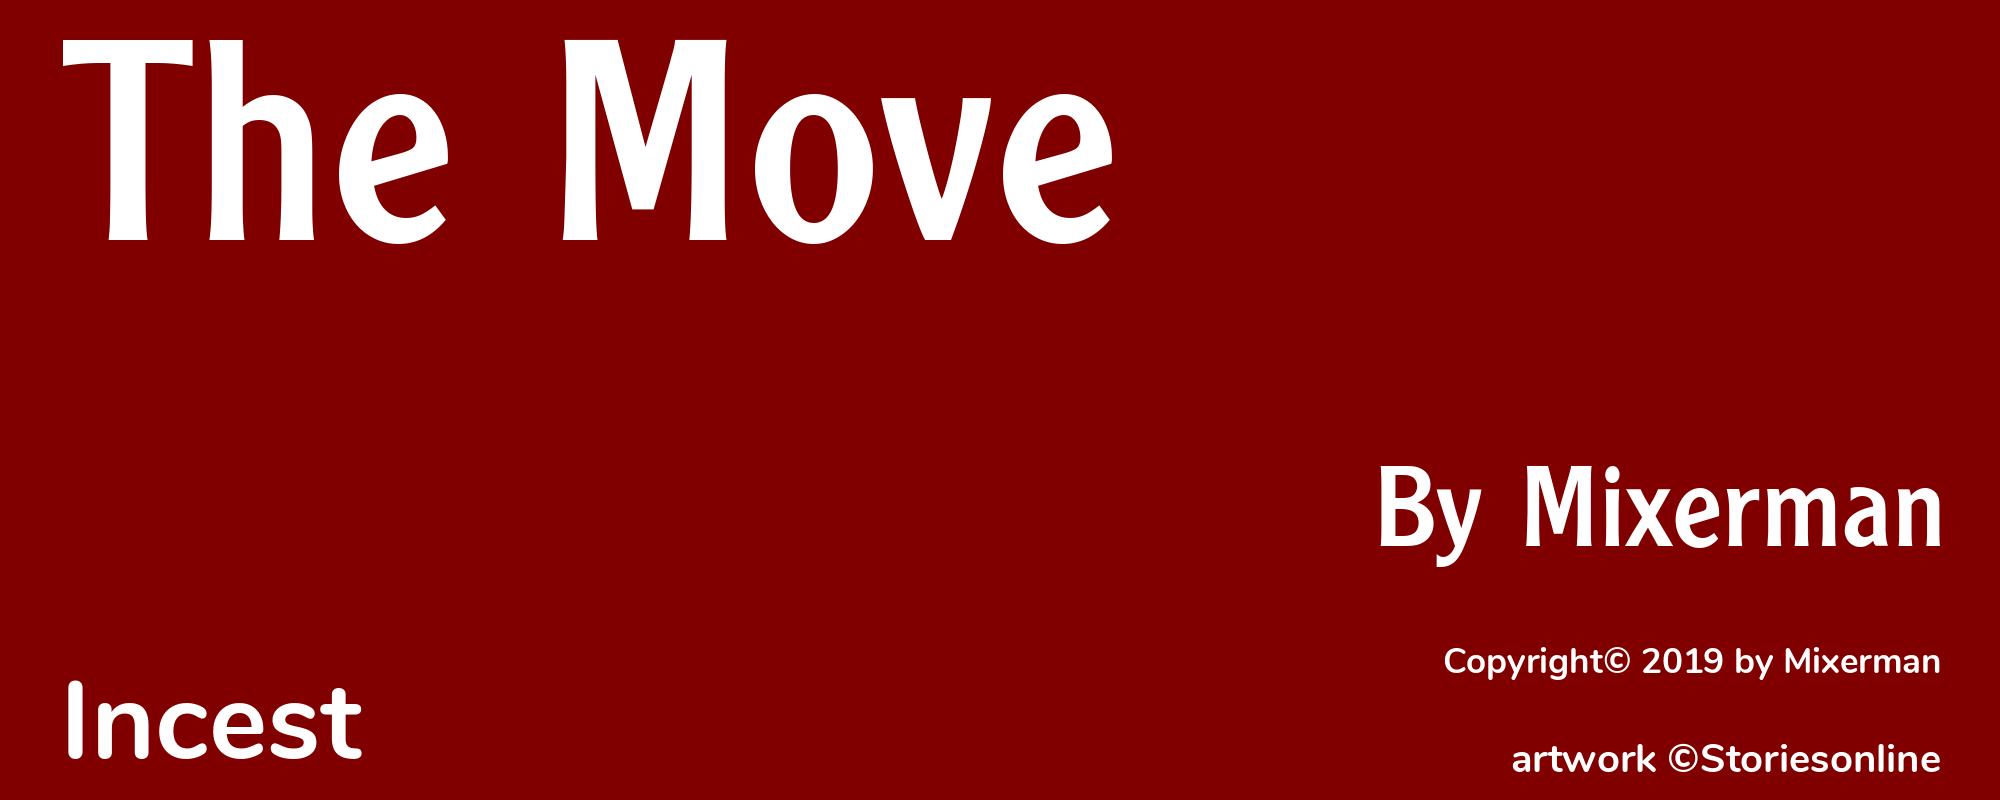 The Move - Cover